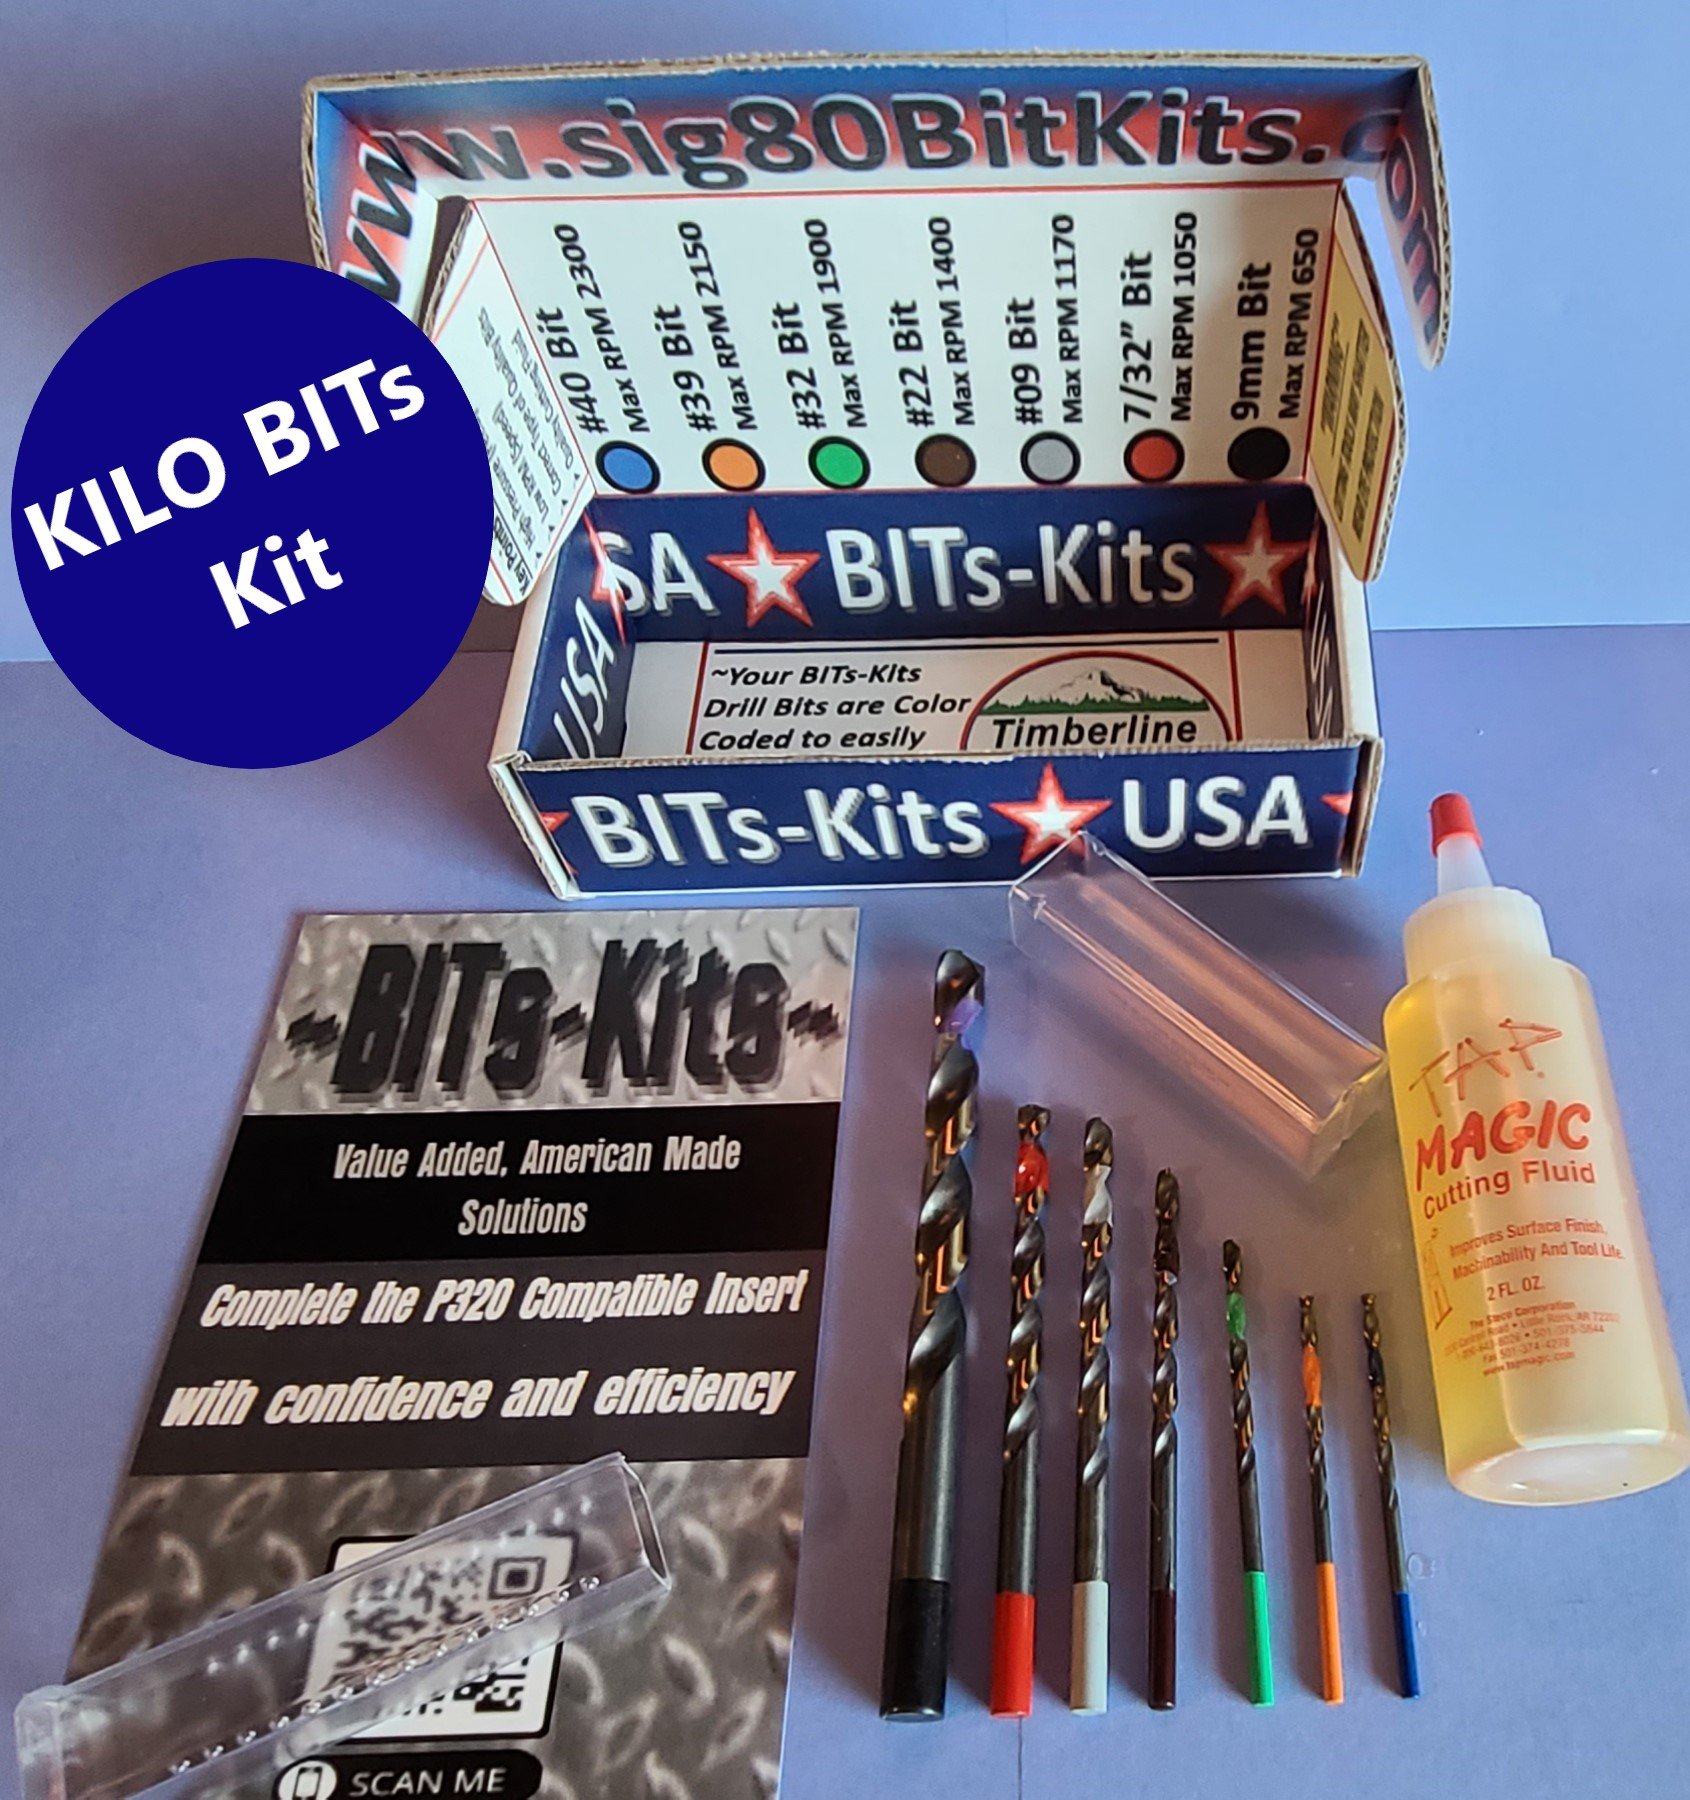 a1 KILO BITs Kit.jpg